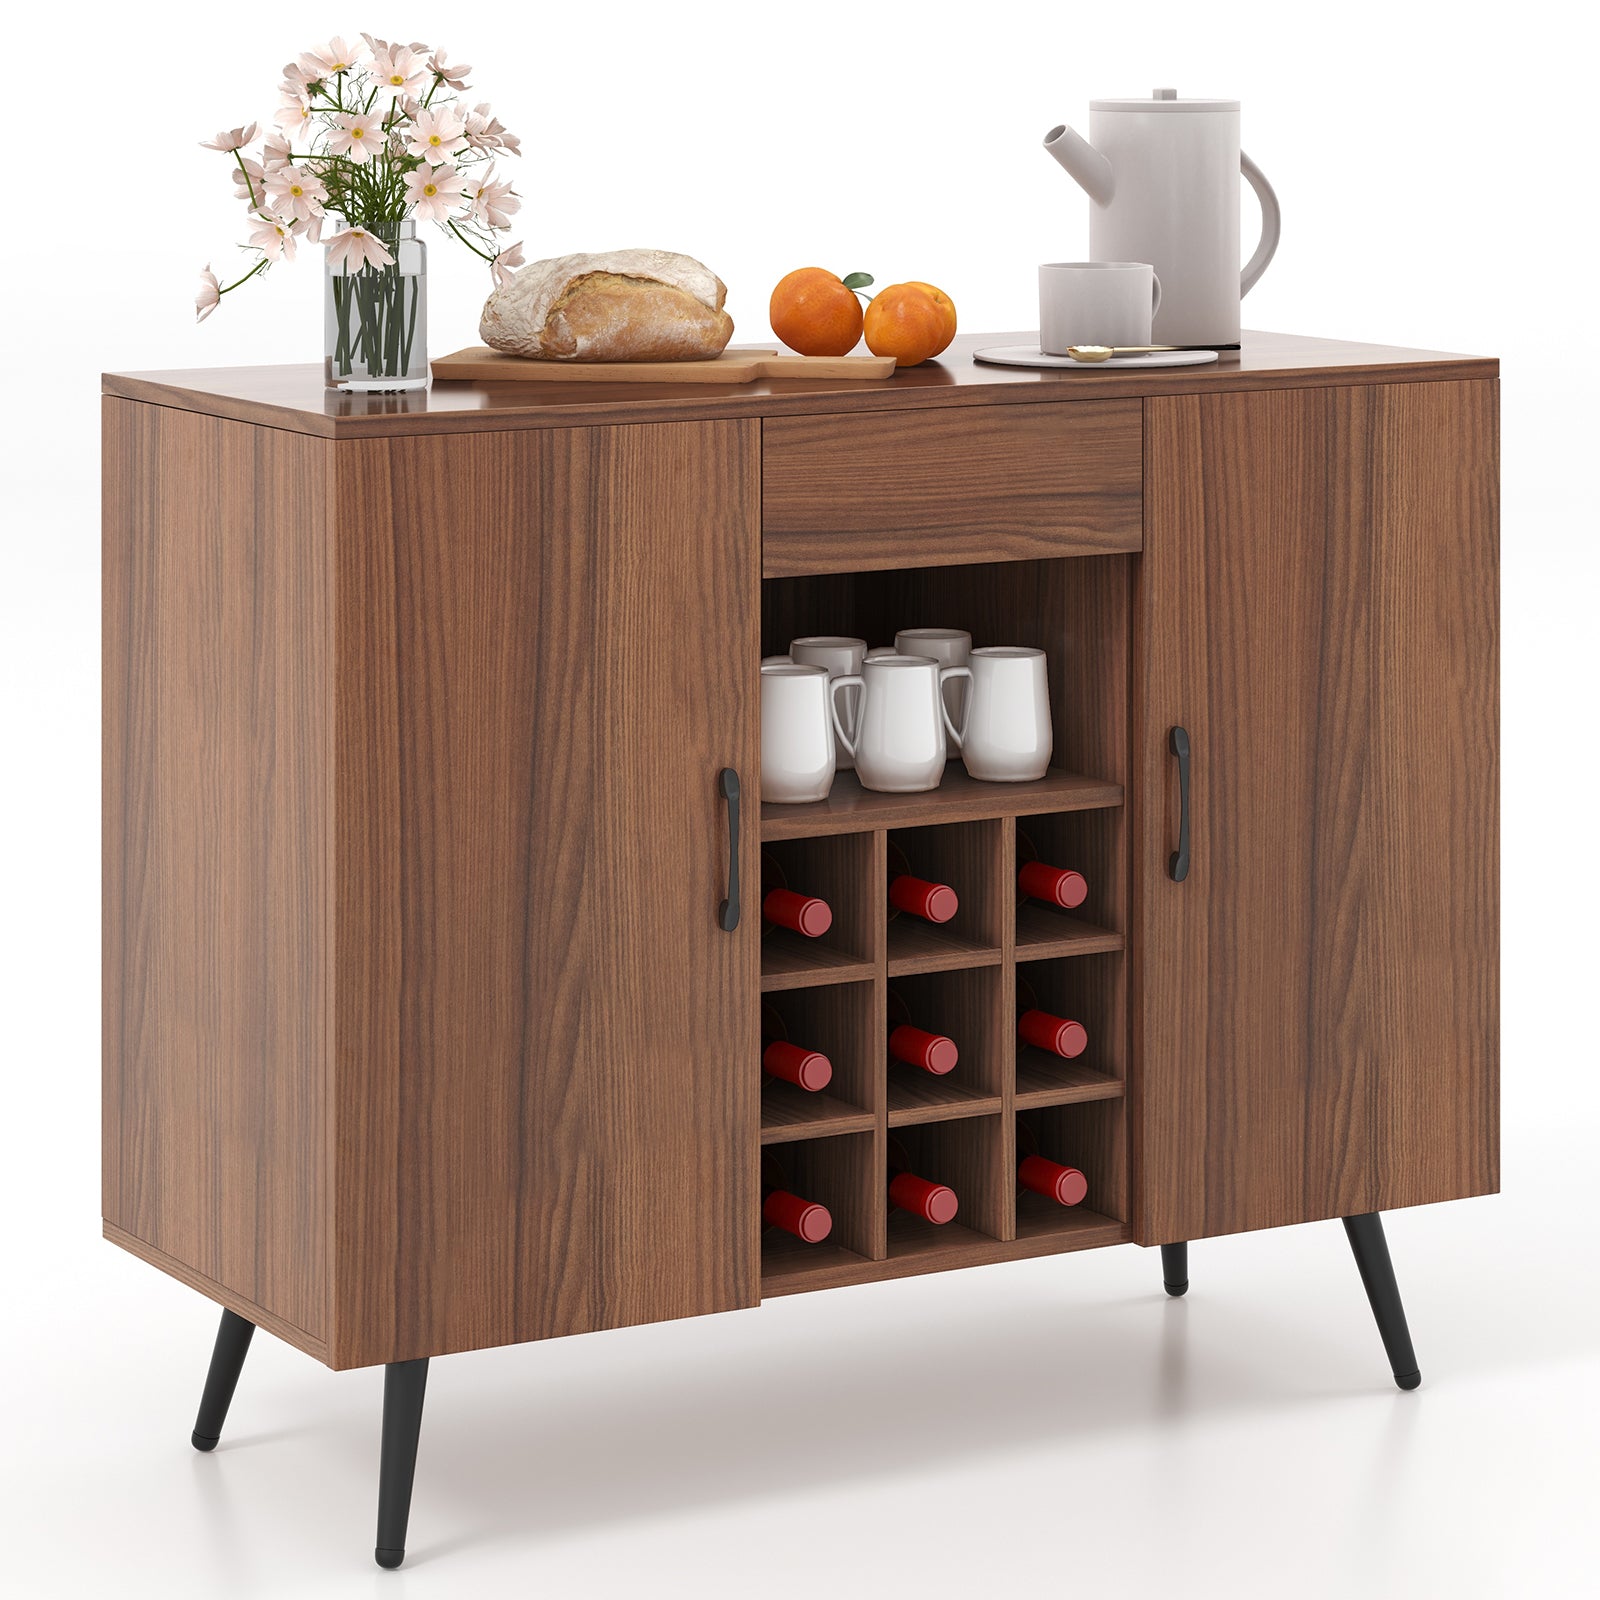 Mid-century Modern Buffet Server Cabinet with Adjustable Shelves-Walnut